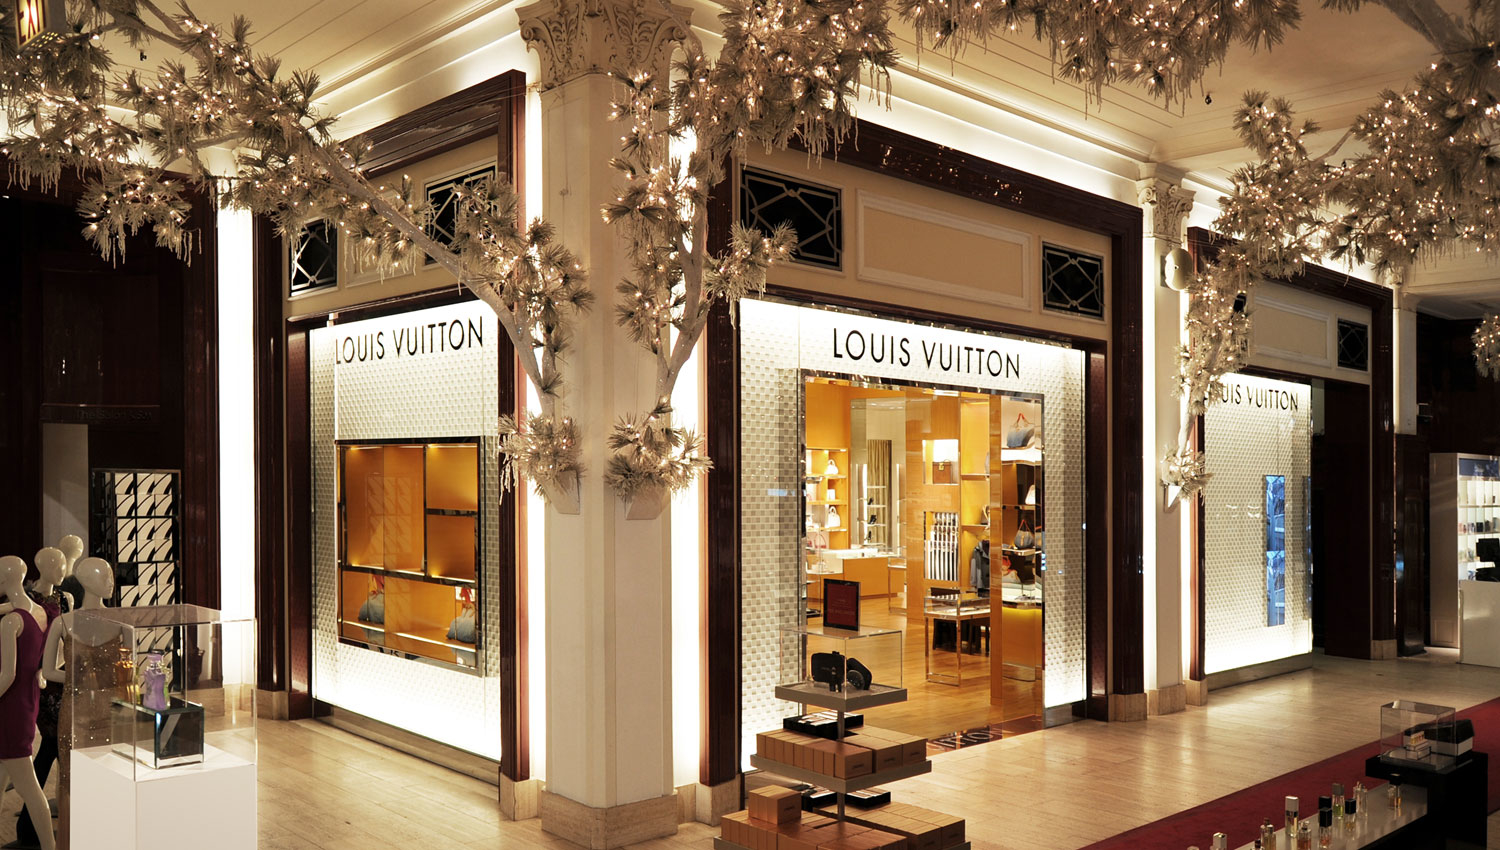 Louis Vuitton New York Saks Fifth Ave, New York New York (NY) - www.semadata.org